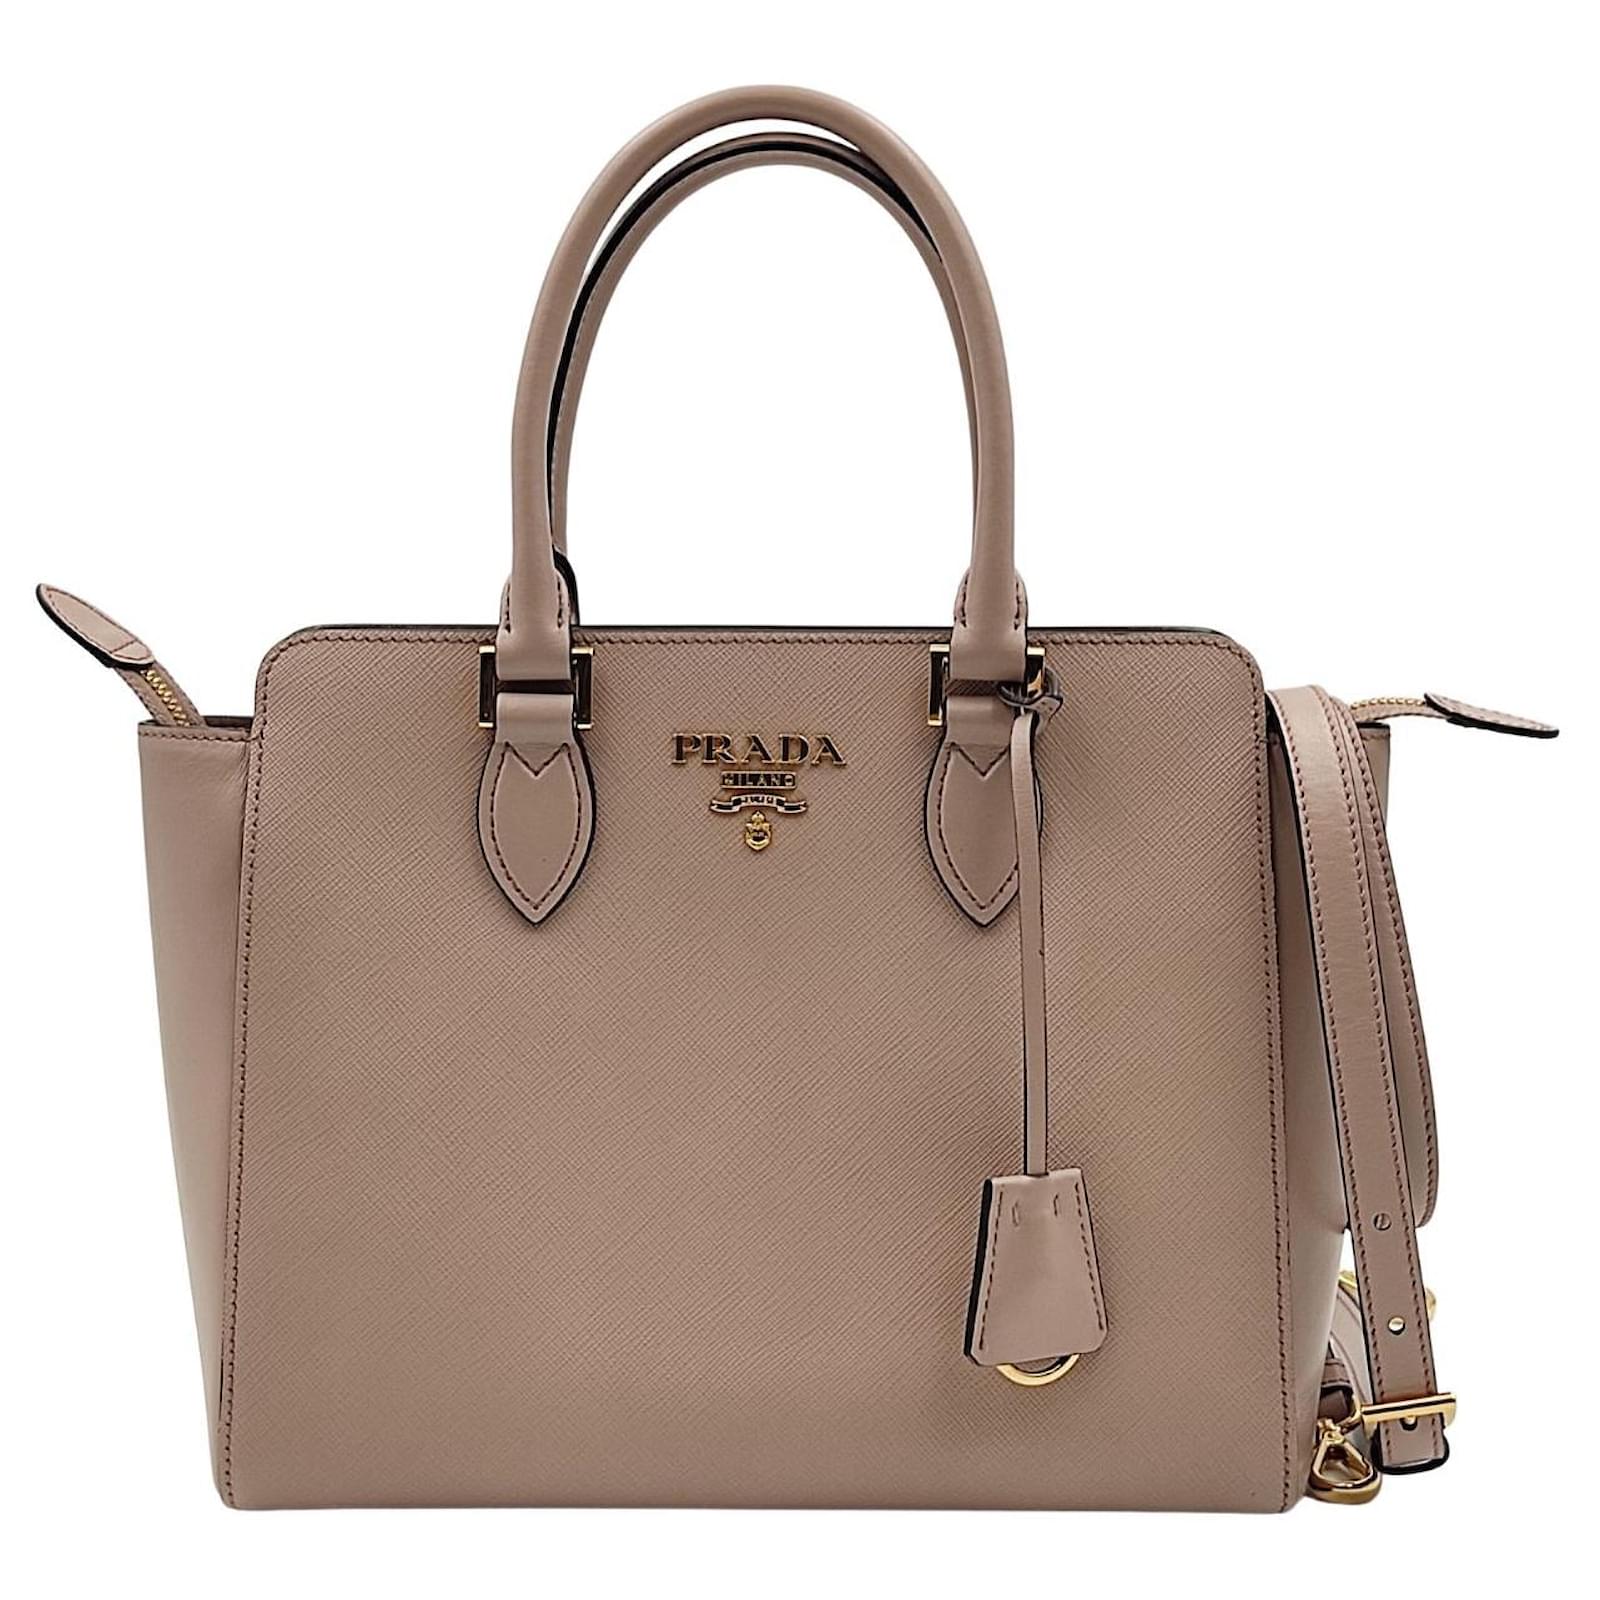 Prada Panier Saffiano Leather Small Bag, Pink, One Size